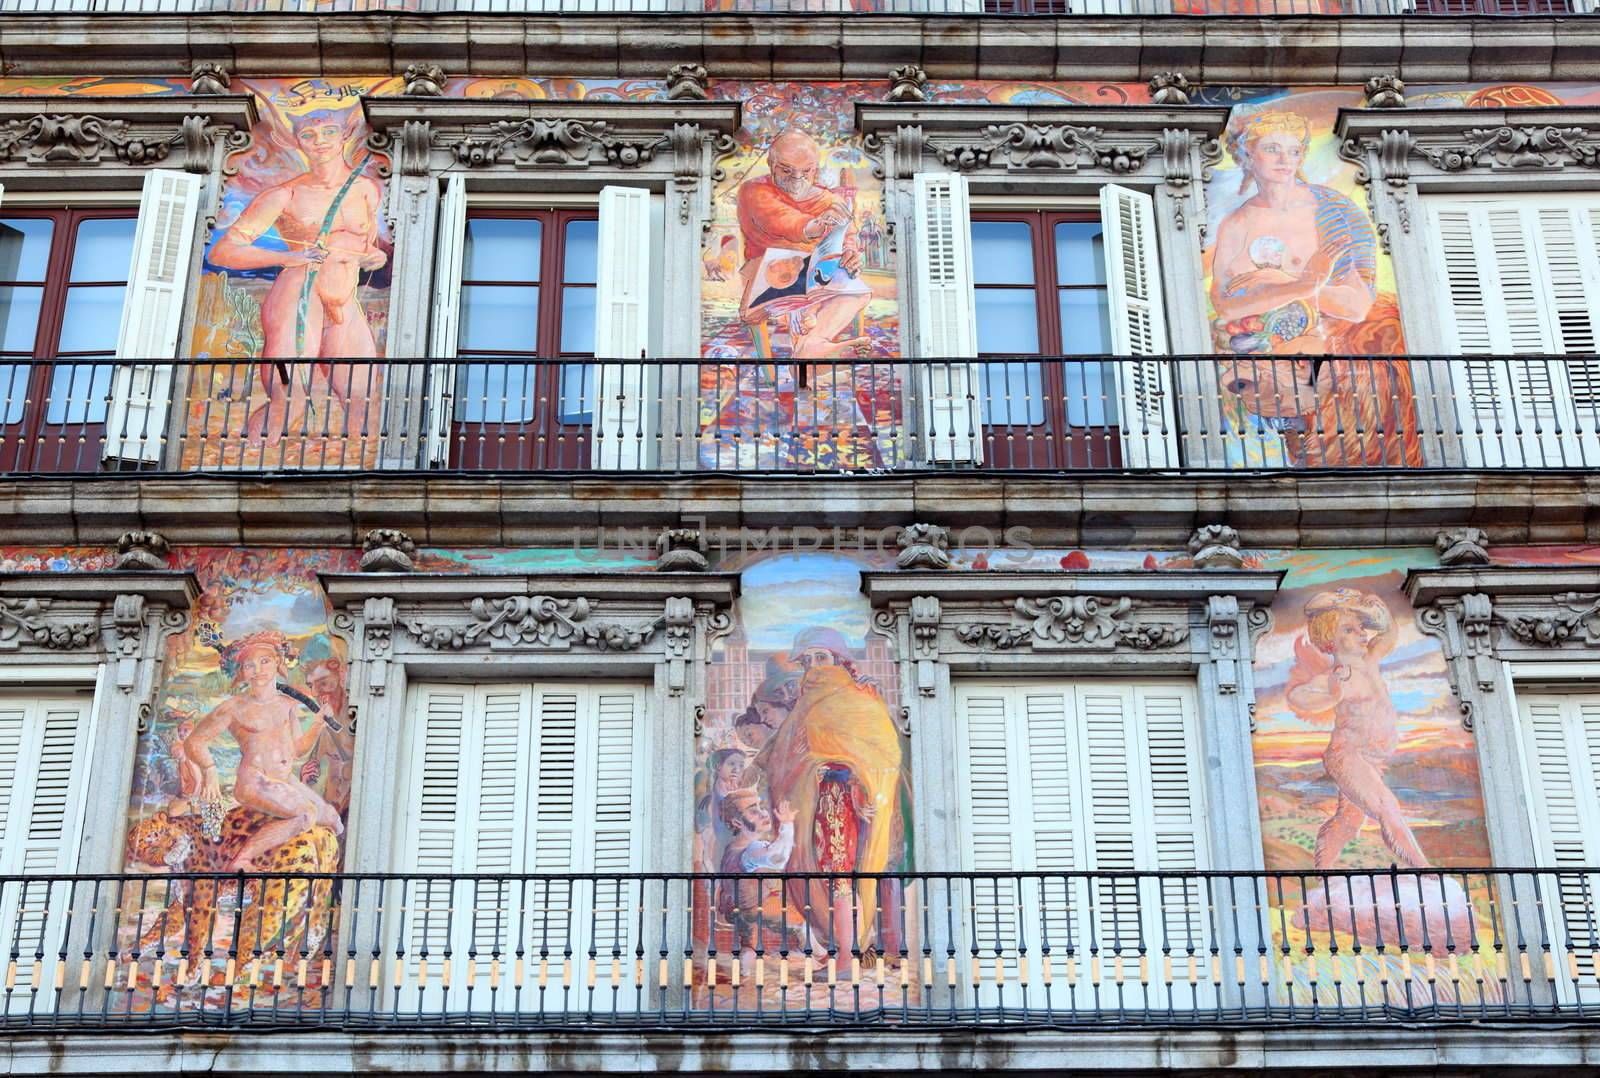 Madrid - Plaza Mayor Bakery House, Casa De La Panaderia. Painted facade on the famous national landmark.